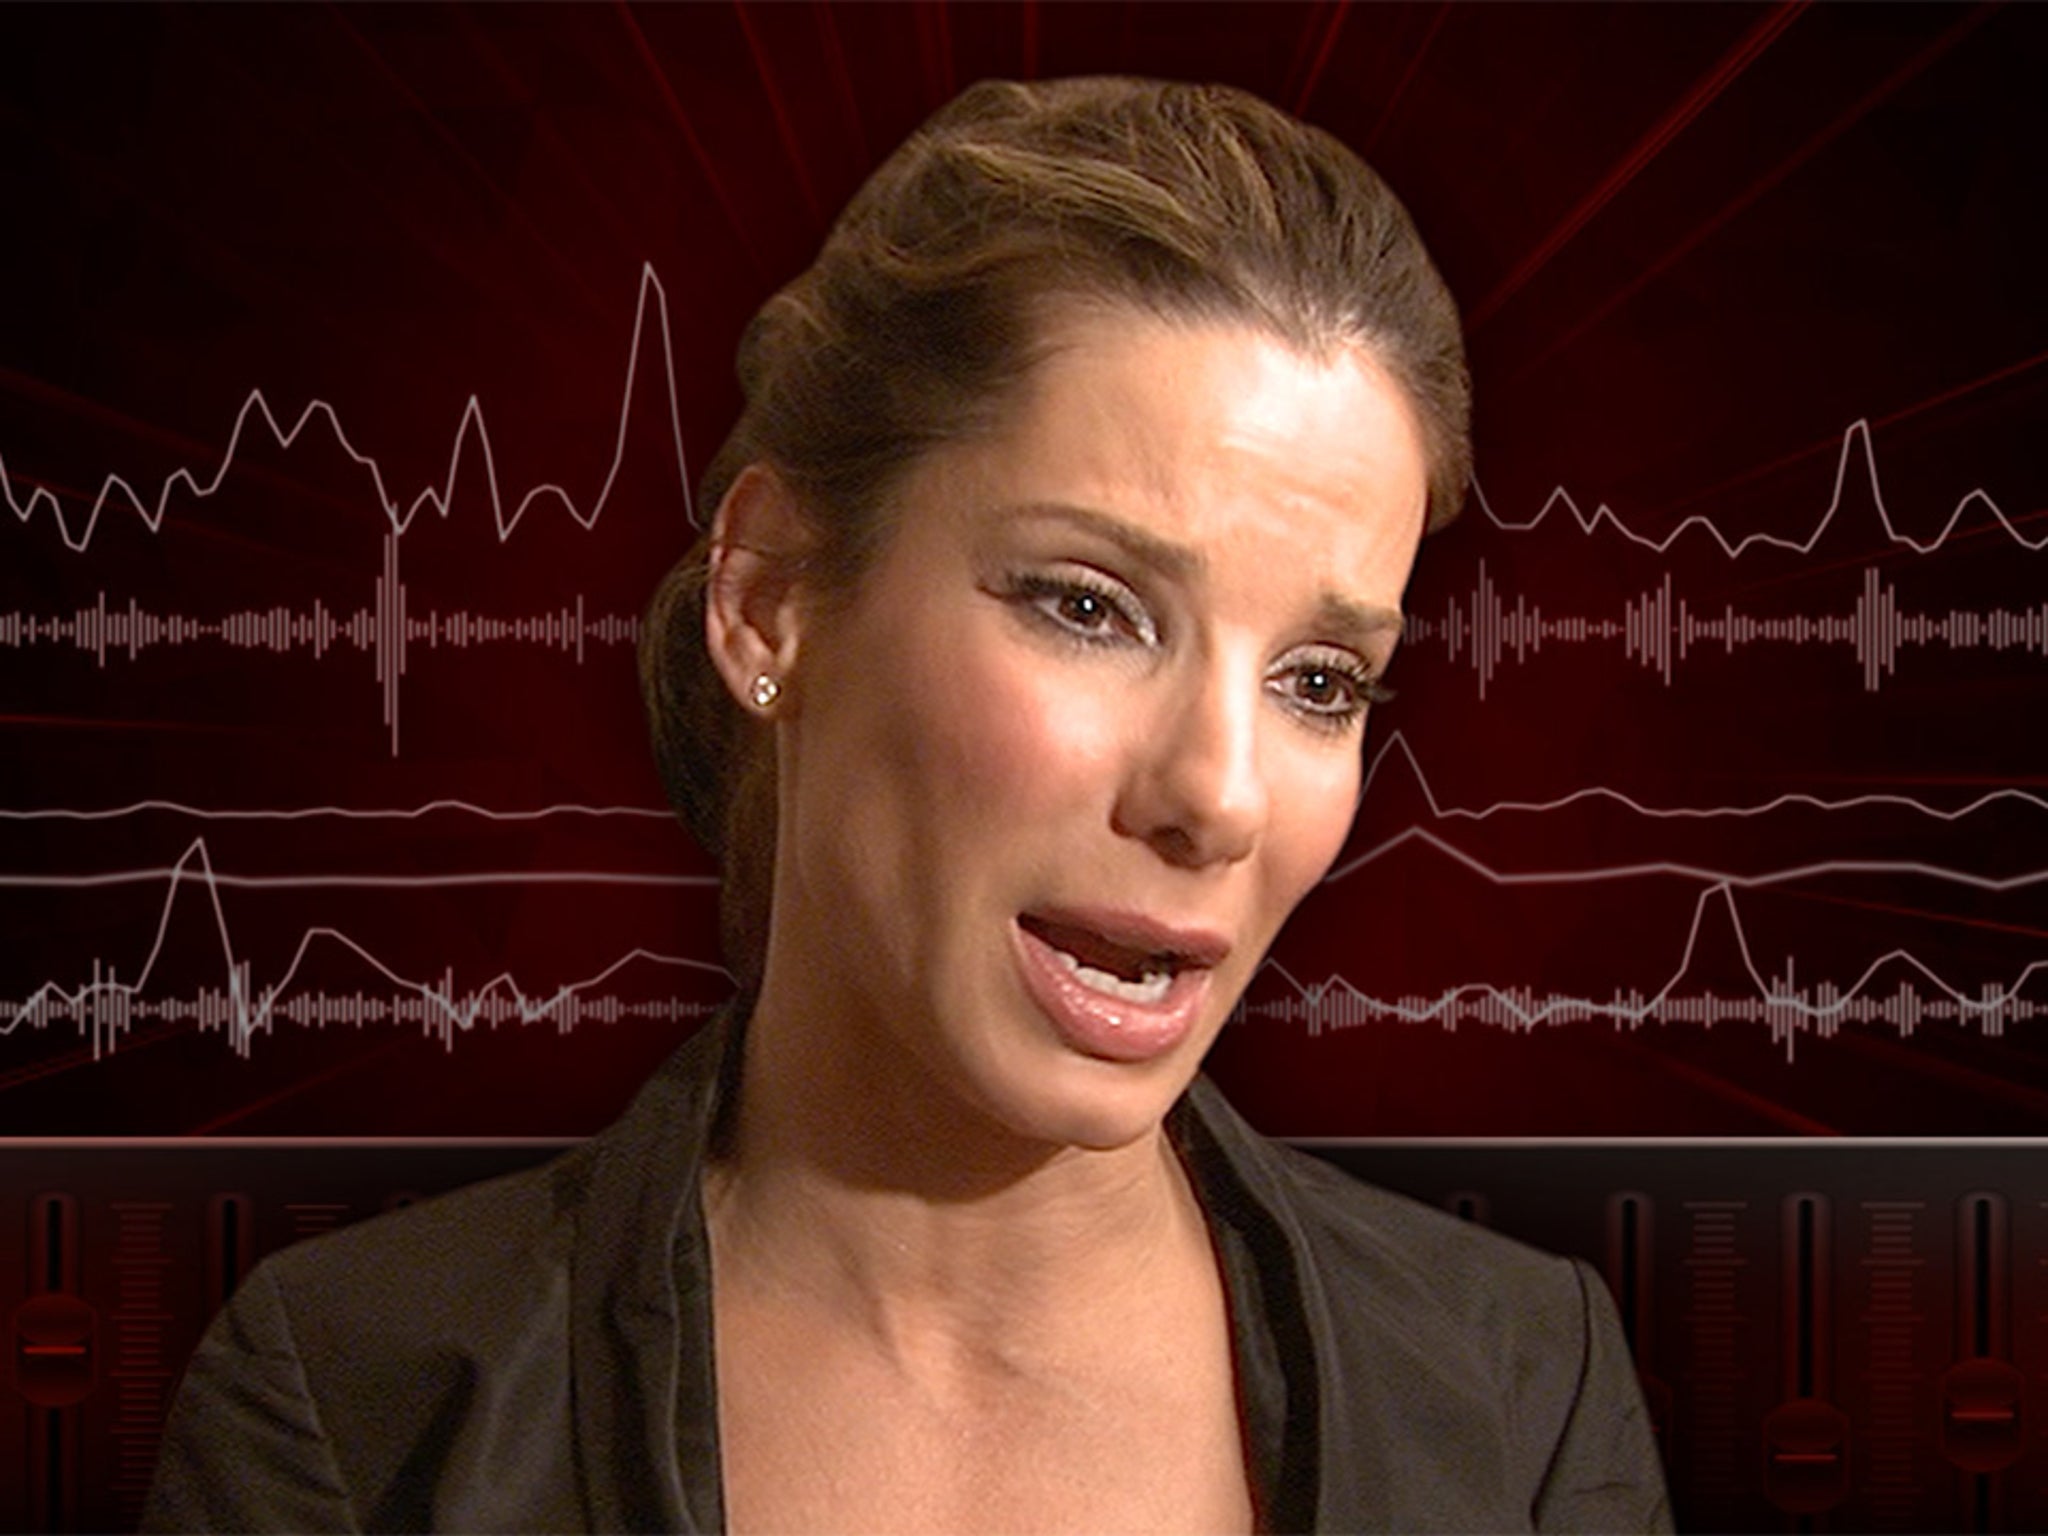 Sandra Bullock -- Chilling 911 Tape Played At Stalker Hearing